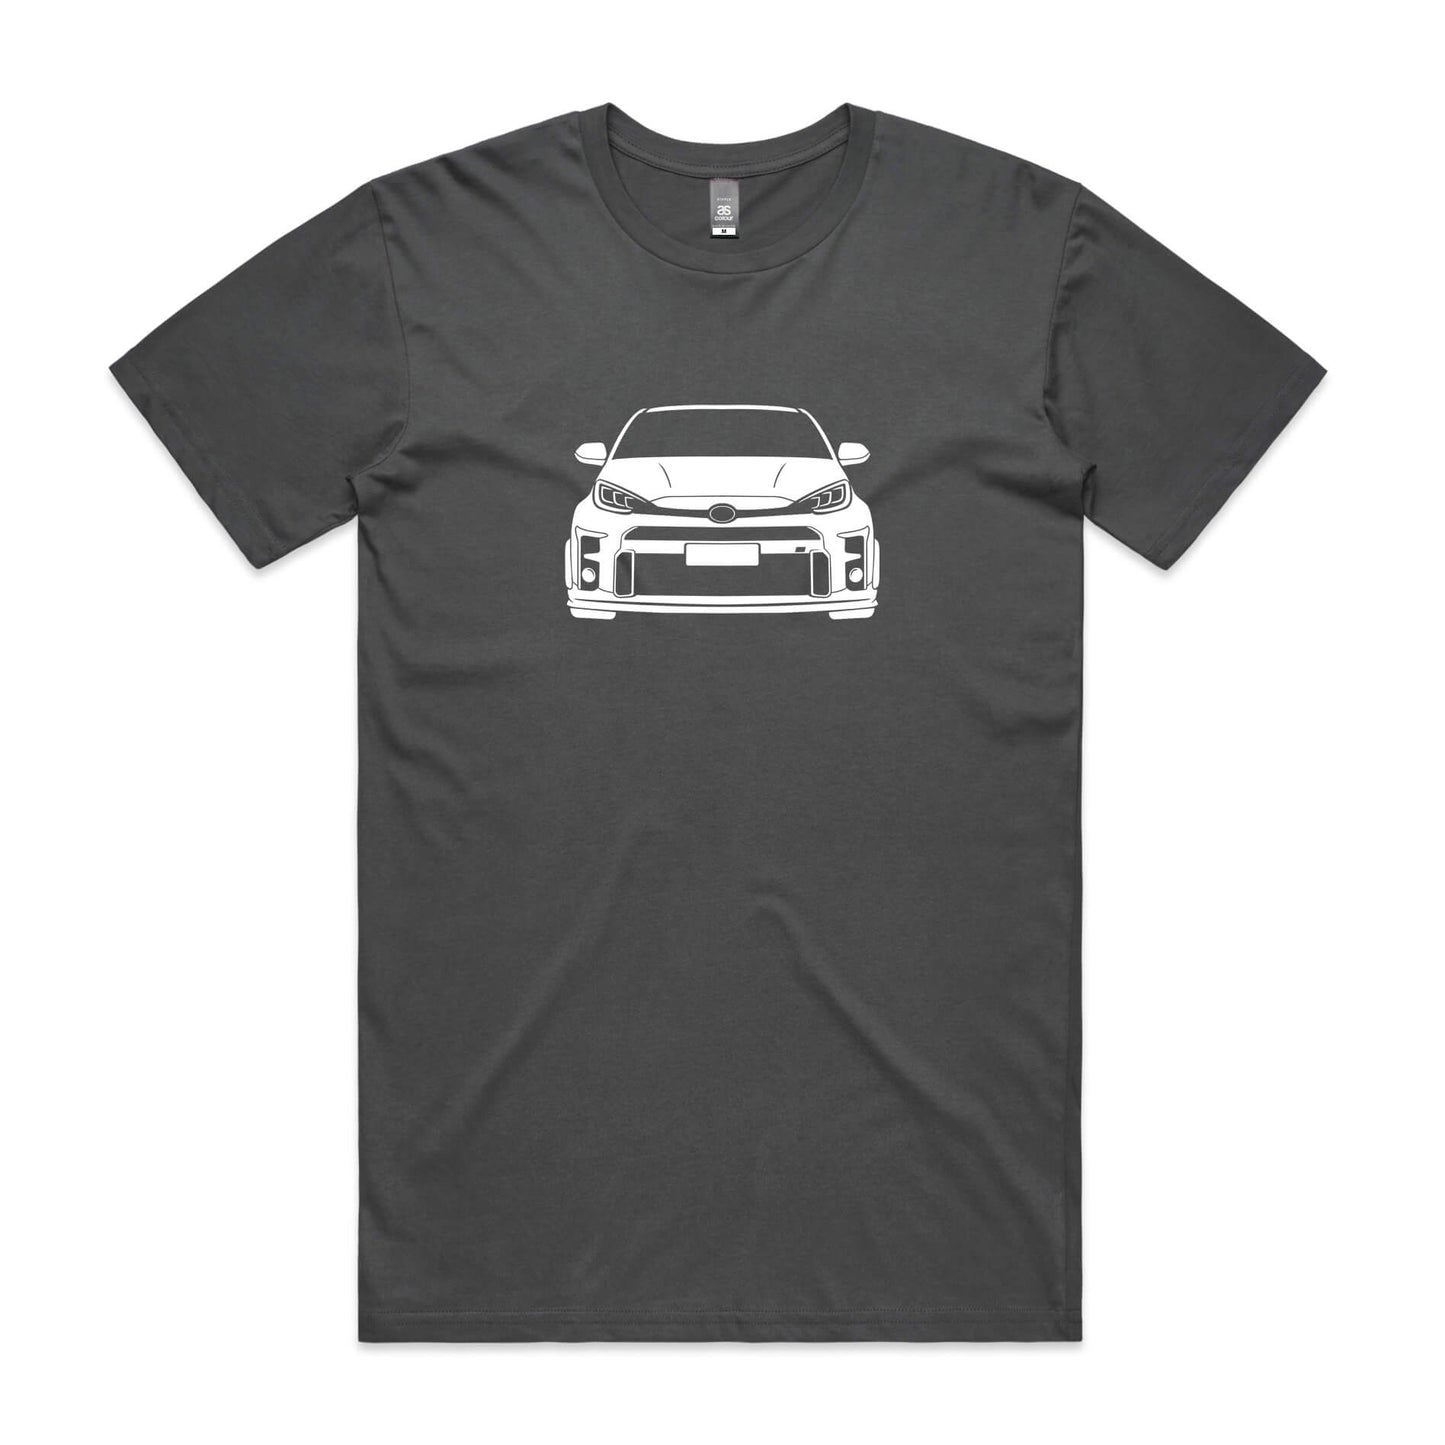 Toyota GR Yaris t-shirt in charcoal grey